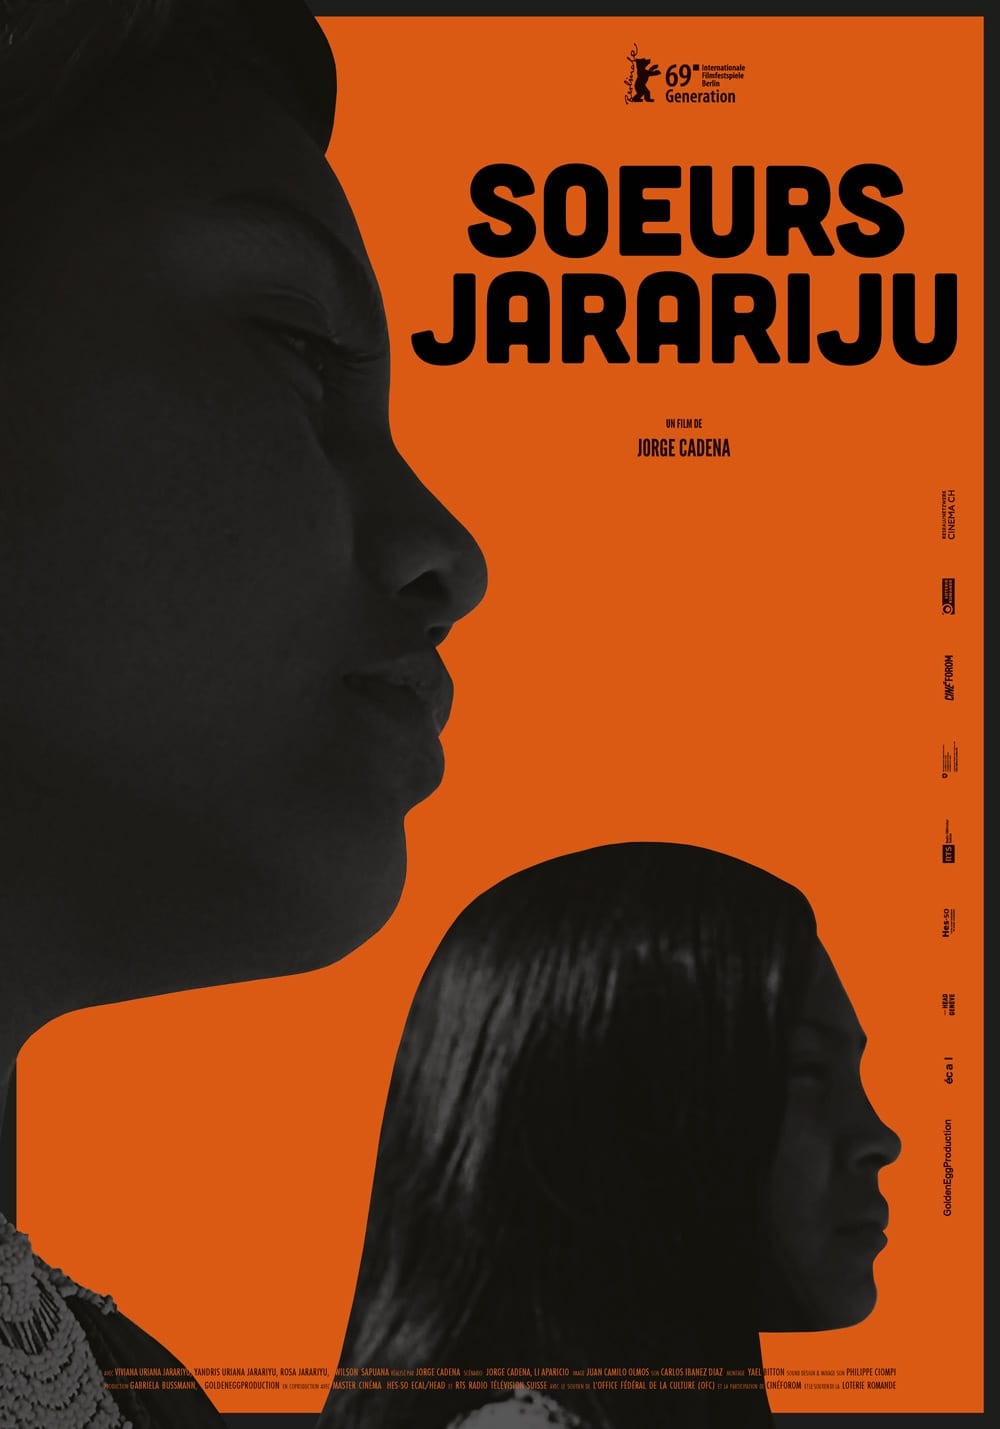 The Jarariju Sisters